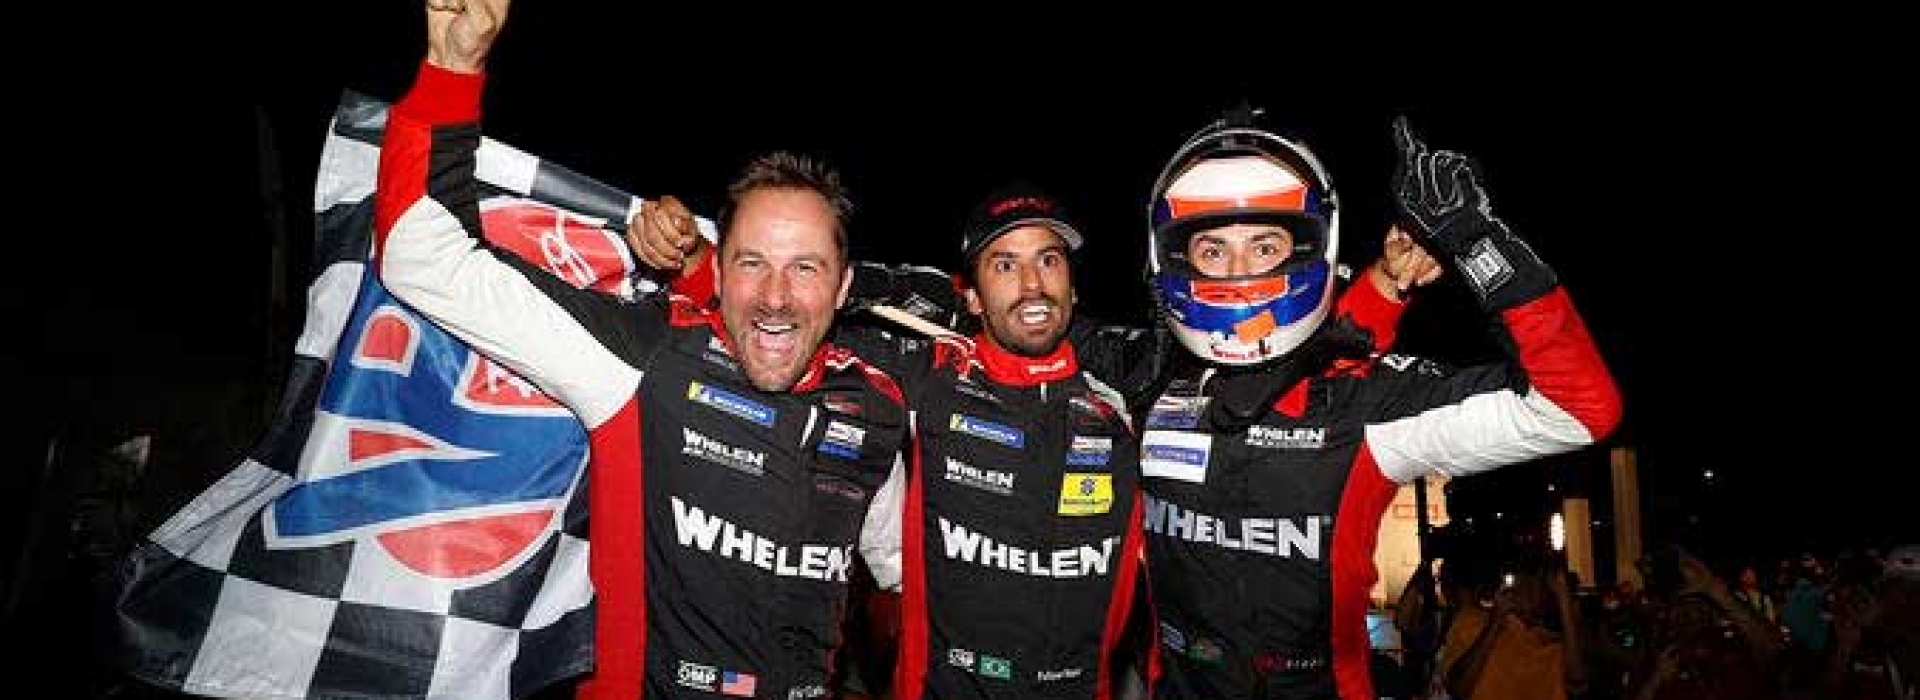 No. 31 Whelen Cadillac Wins Motul Petit Le Mans While No. 6 Acura Team Penske Hangs On For DPi Championship